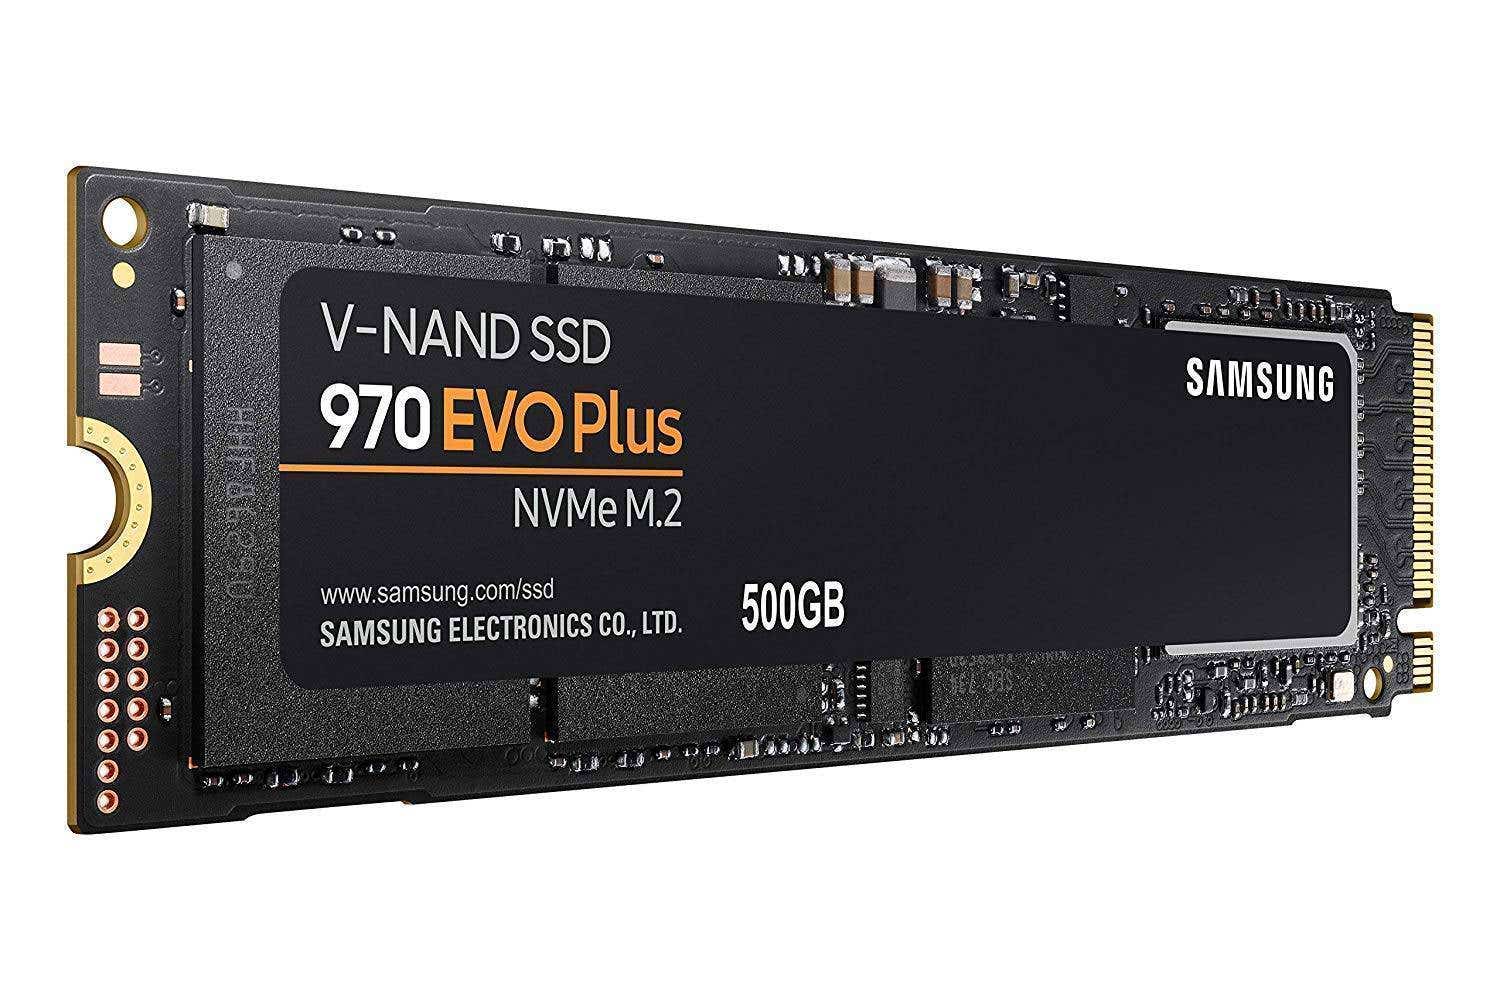 Samsung 970 EVO PLUS NVMe M.2 500GB internal Solid State Drive SSD - MZ-V7S500BW